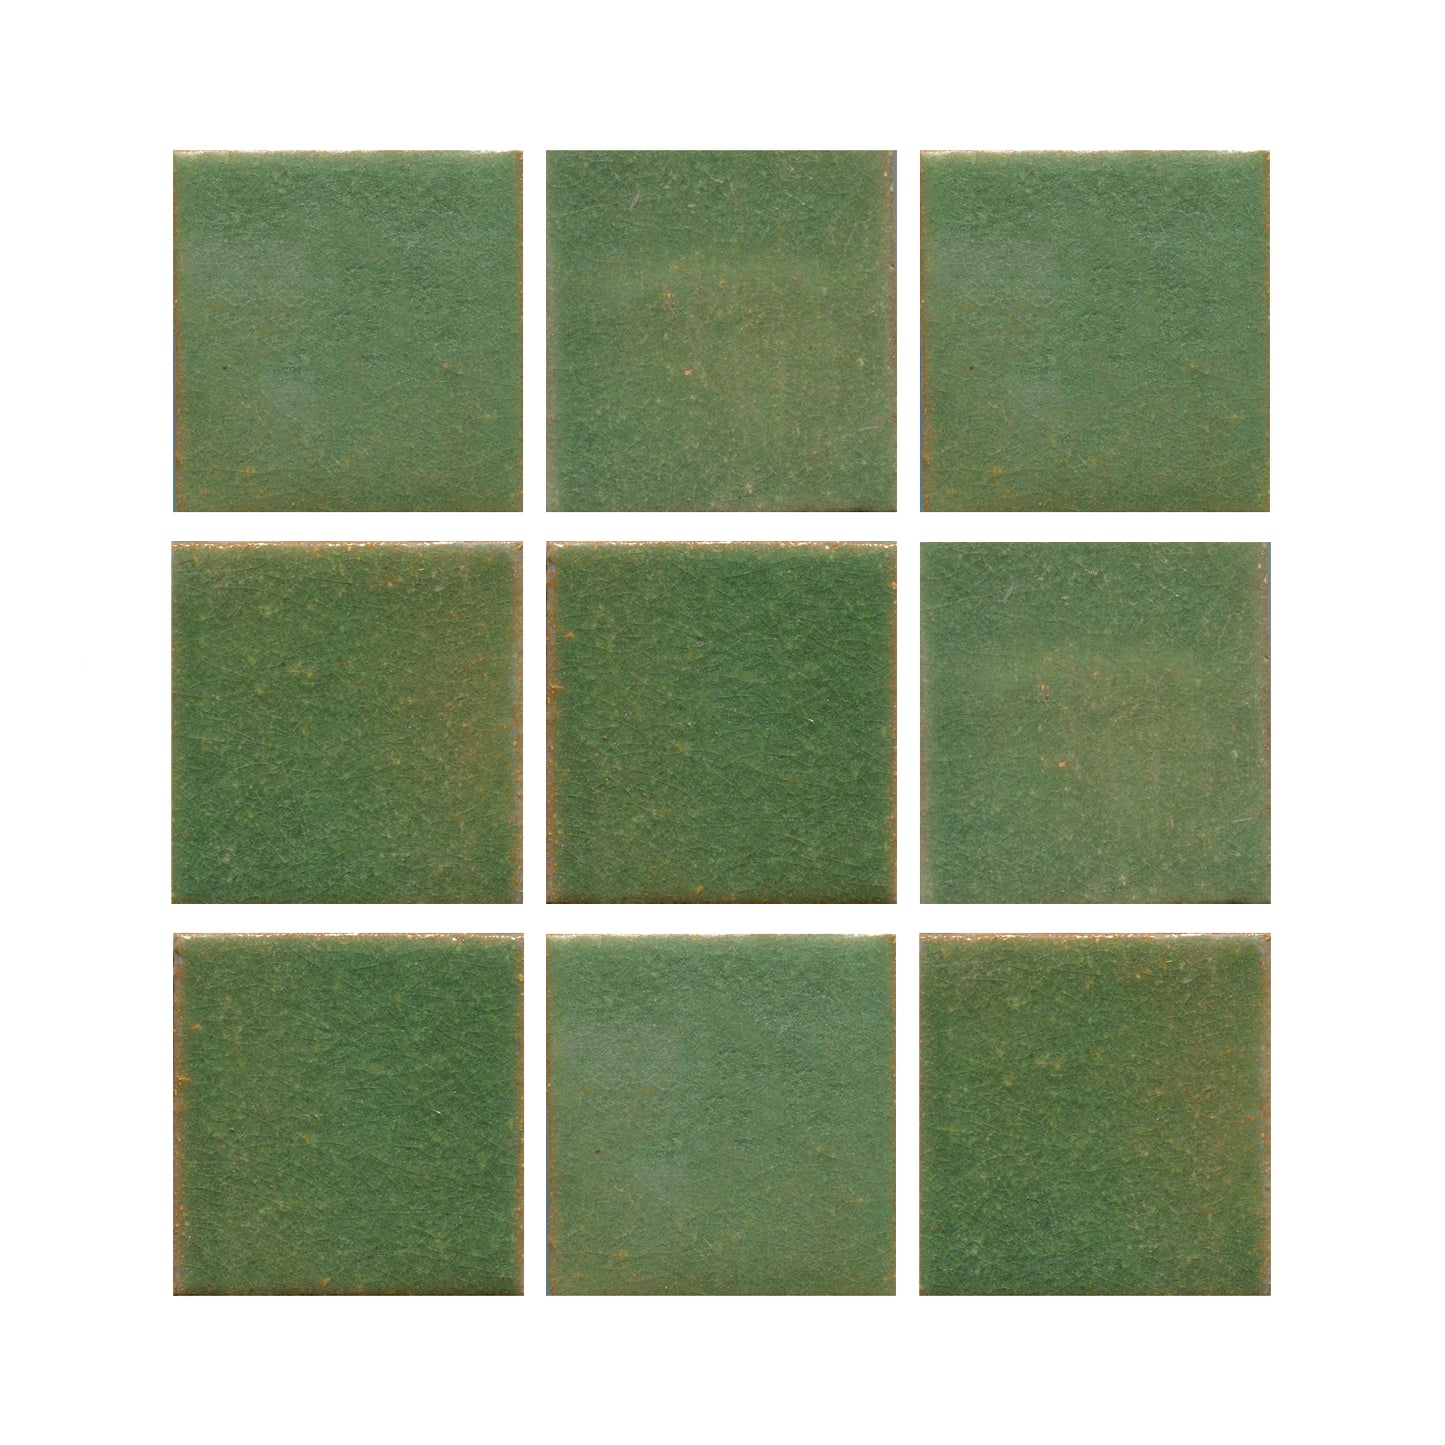 Avocado green 3x3 field tile